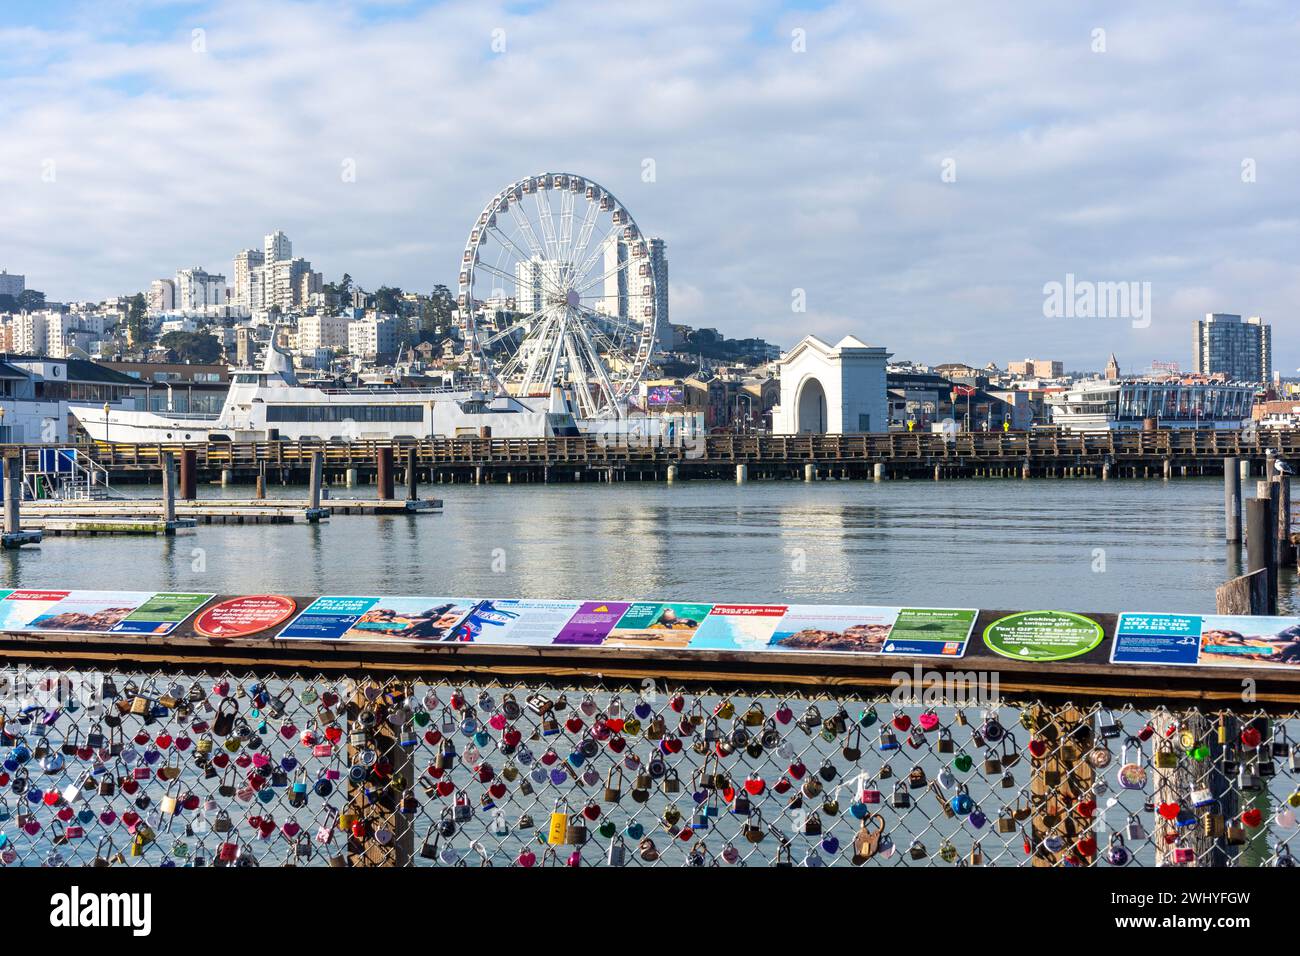 Love locks at K Dock, Pier 39, Fisherman's Wharf District, San Francisco, California, United States Stock Photo